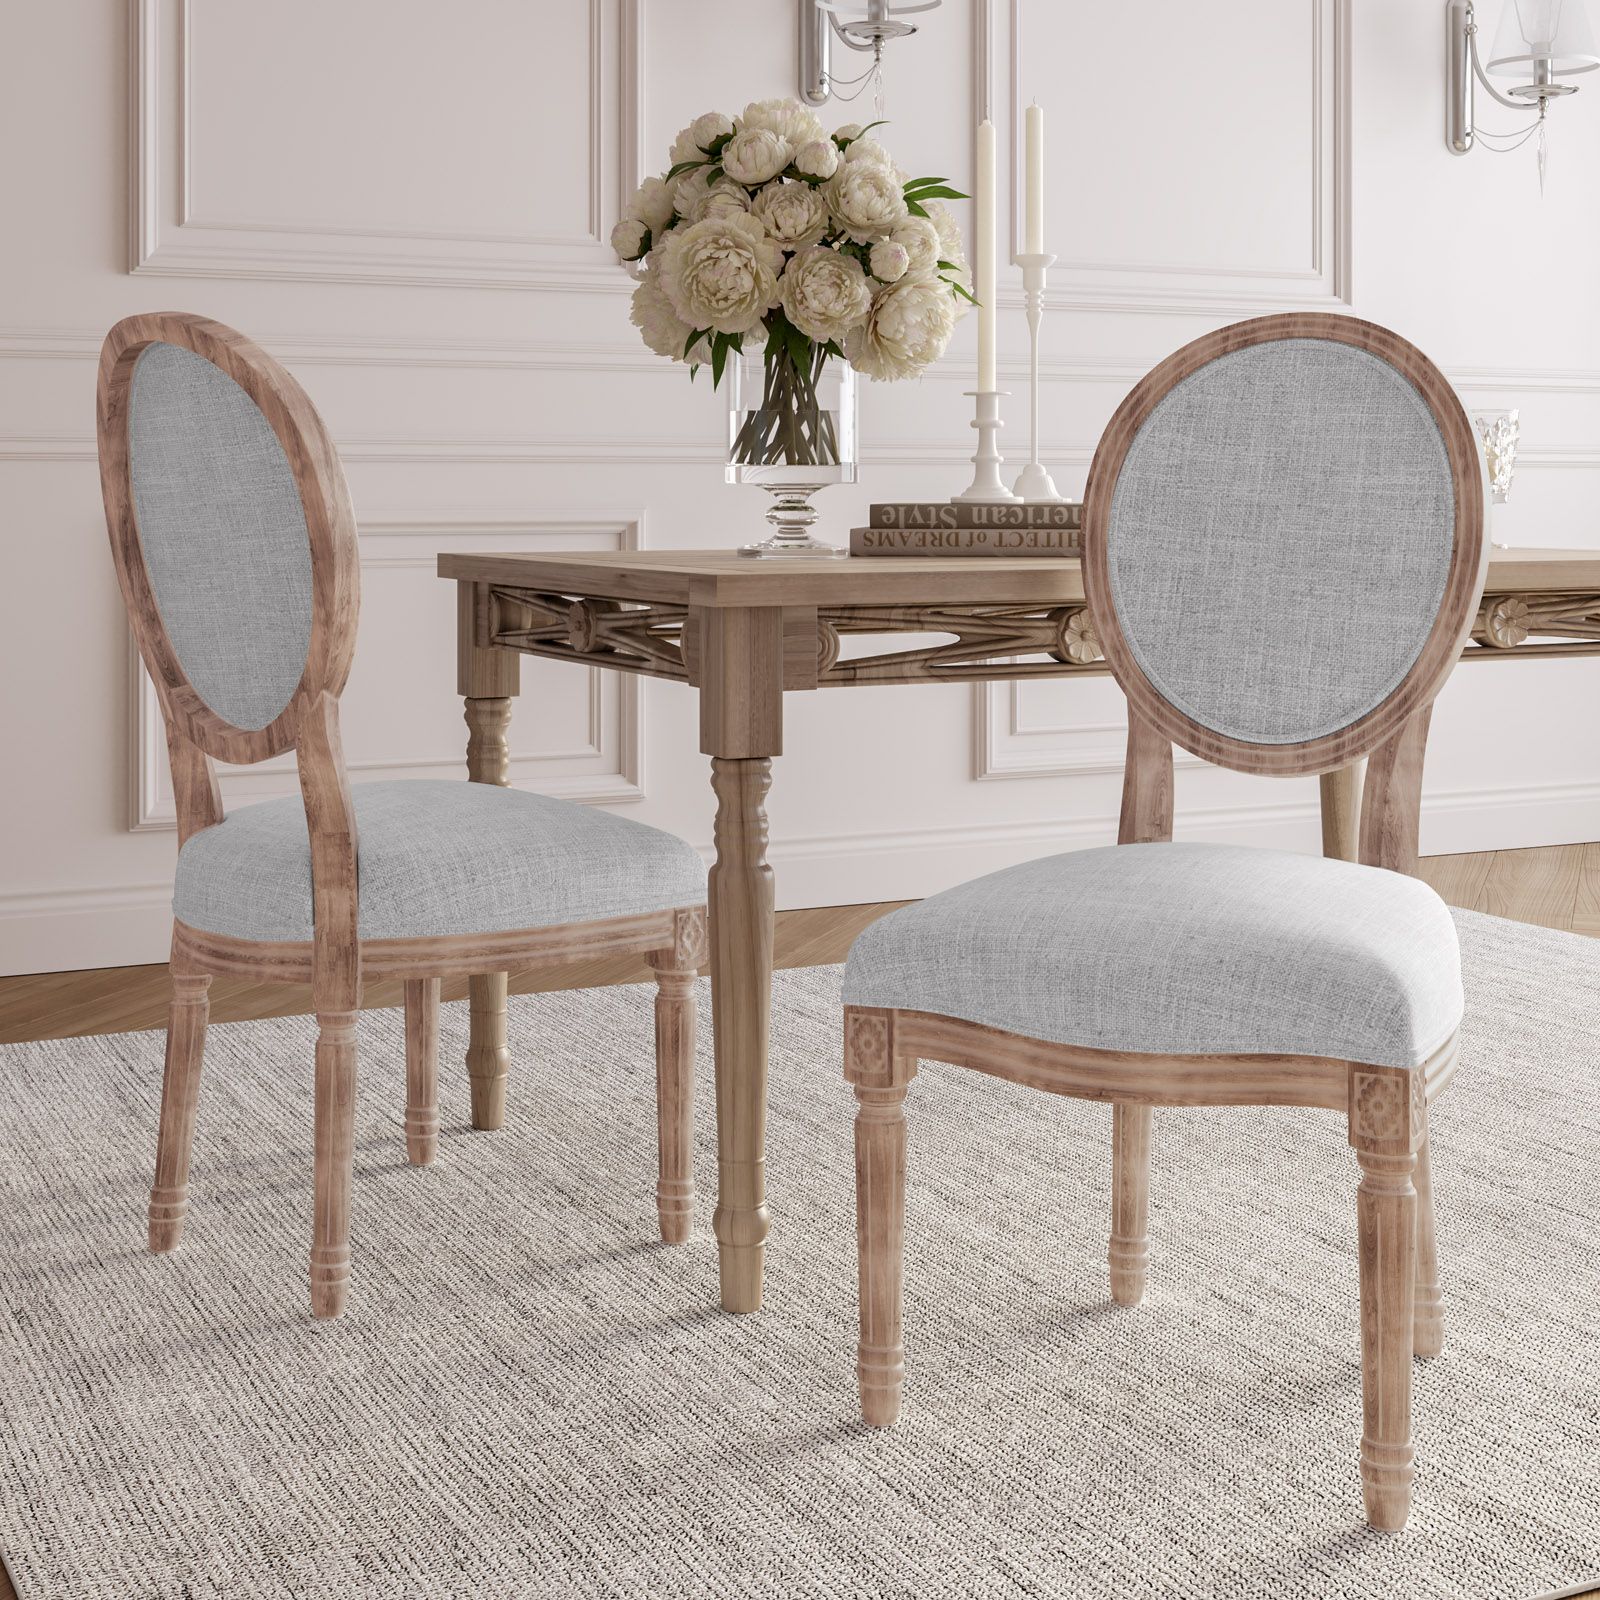 Set 2 sedie imbottite in legno e tessuto lino grigio ghiaccio - Paragon